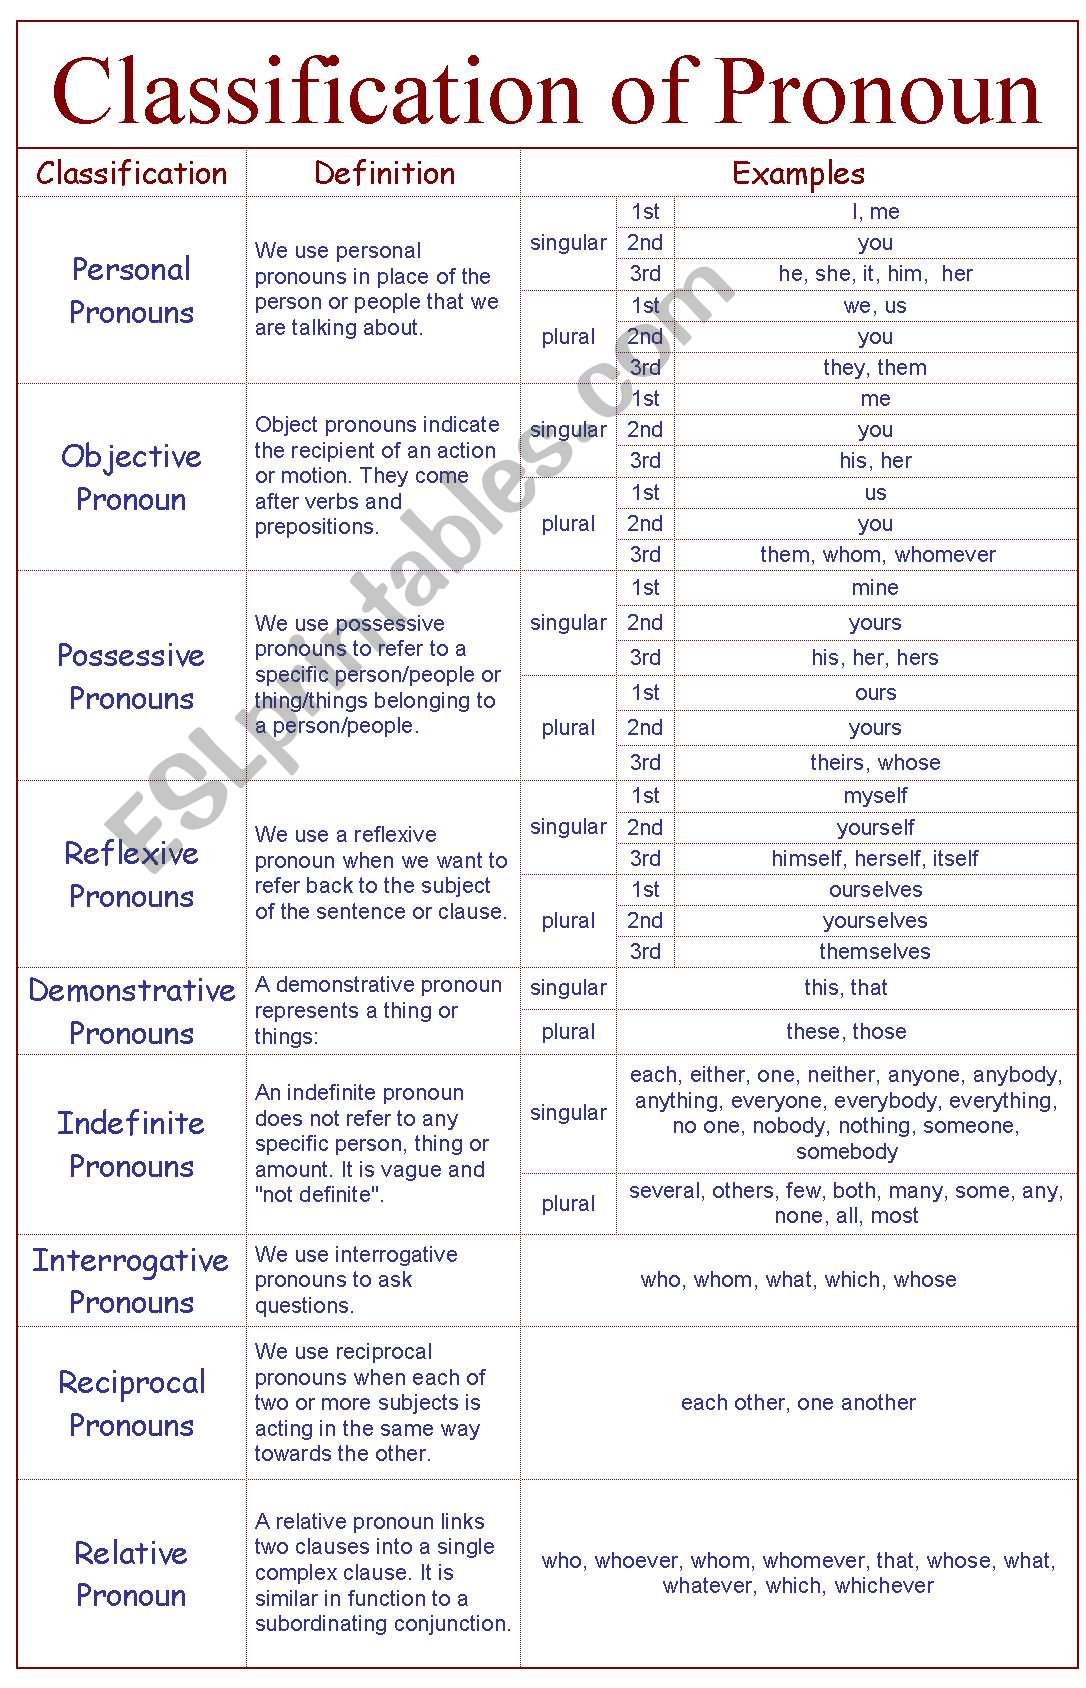 classification-of-pronoun-esl-worksheet-by-mrsabirqureshi